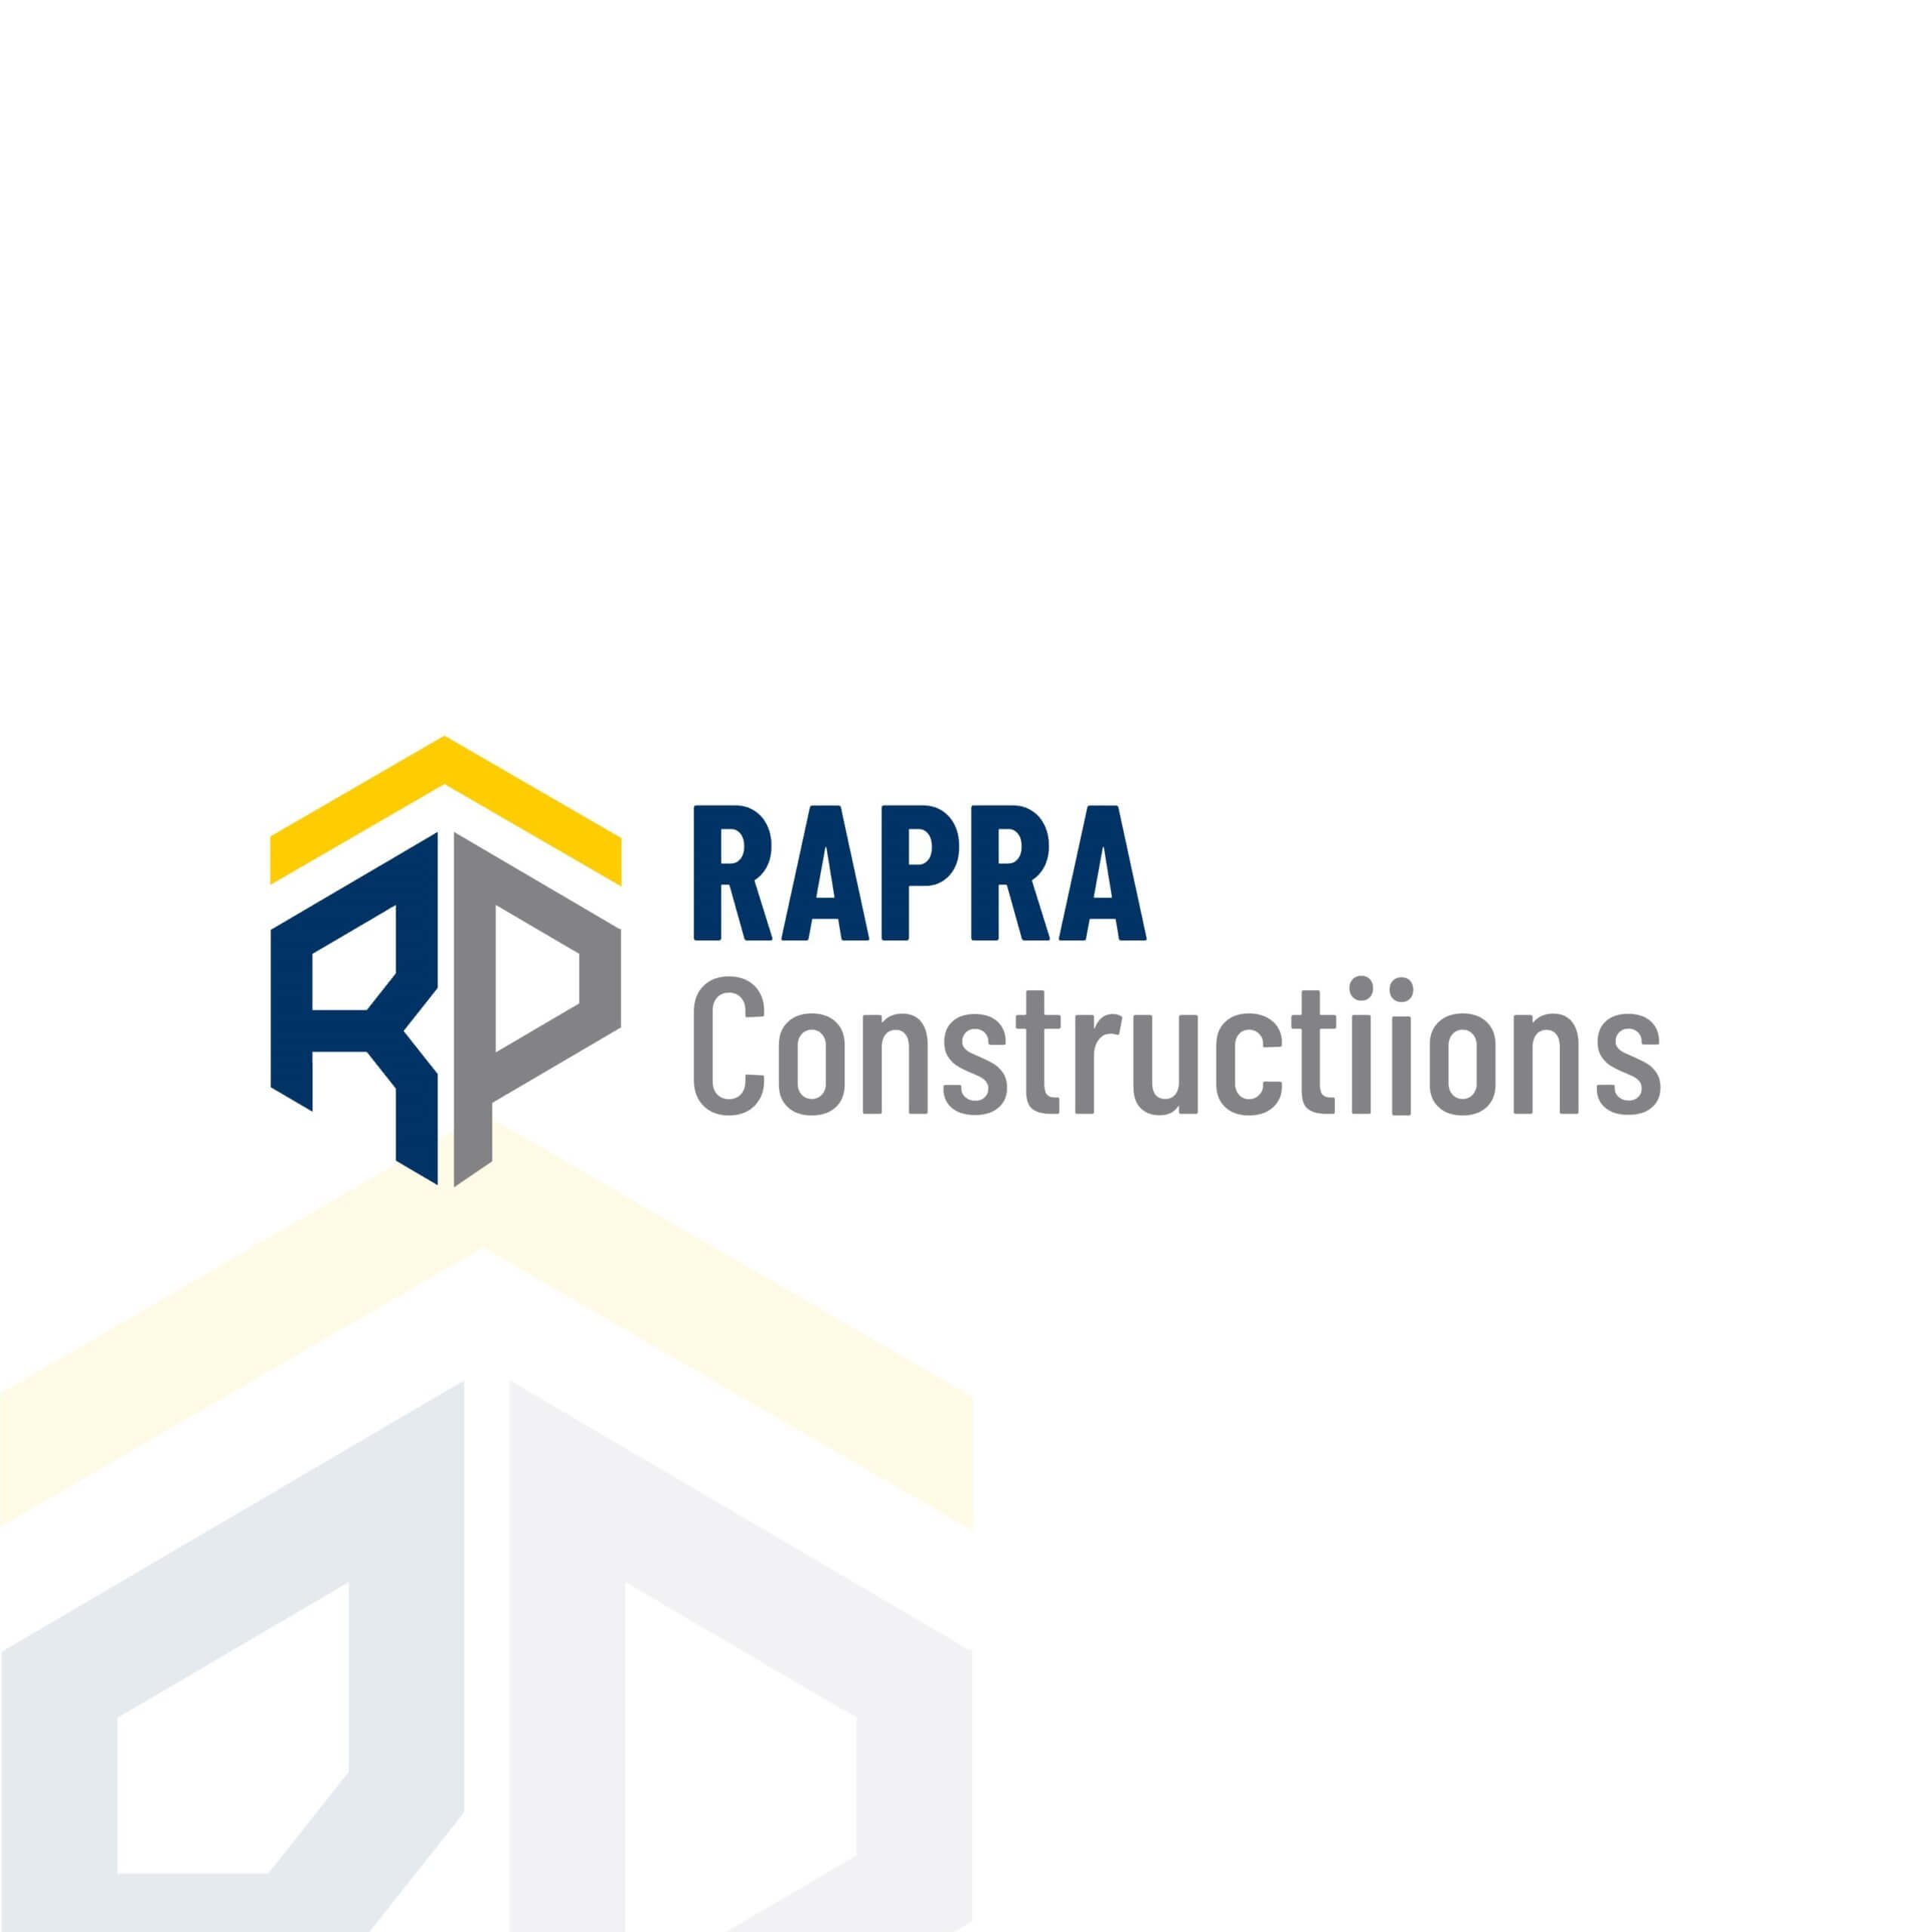 Rapra Construction Company